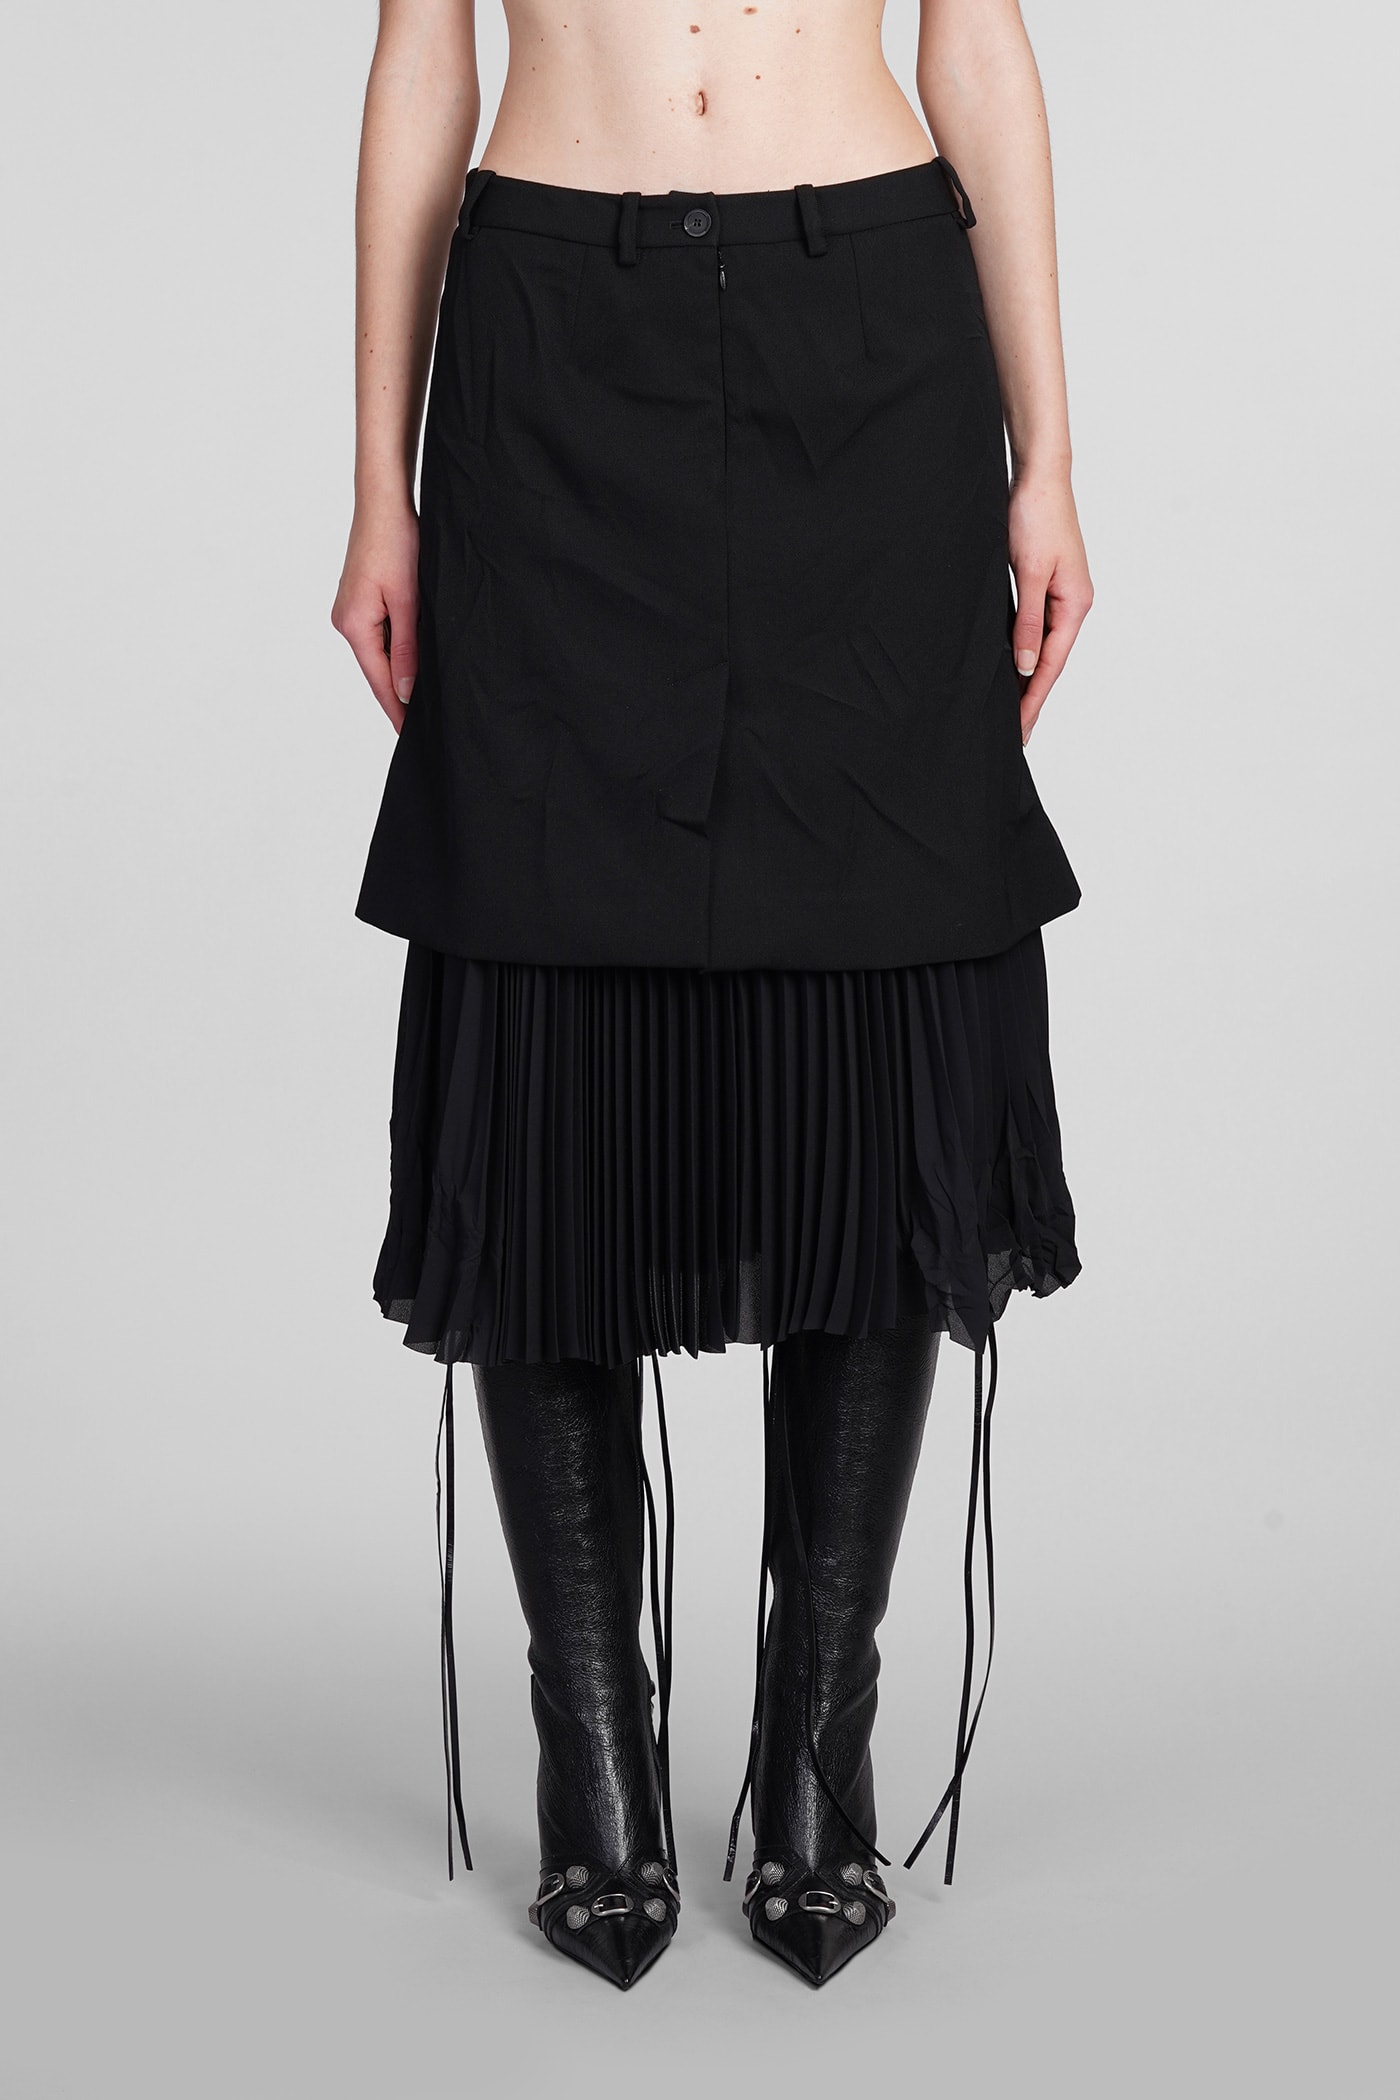 Balenciaga Skirt In Black Wool